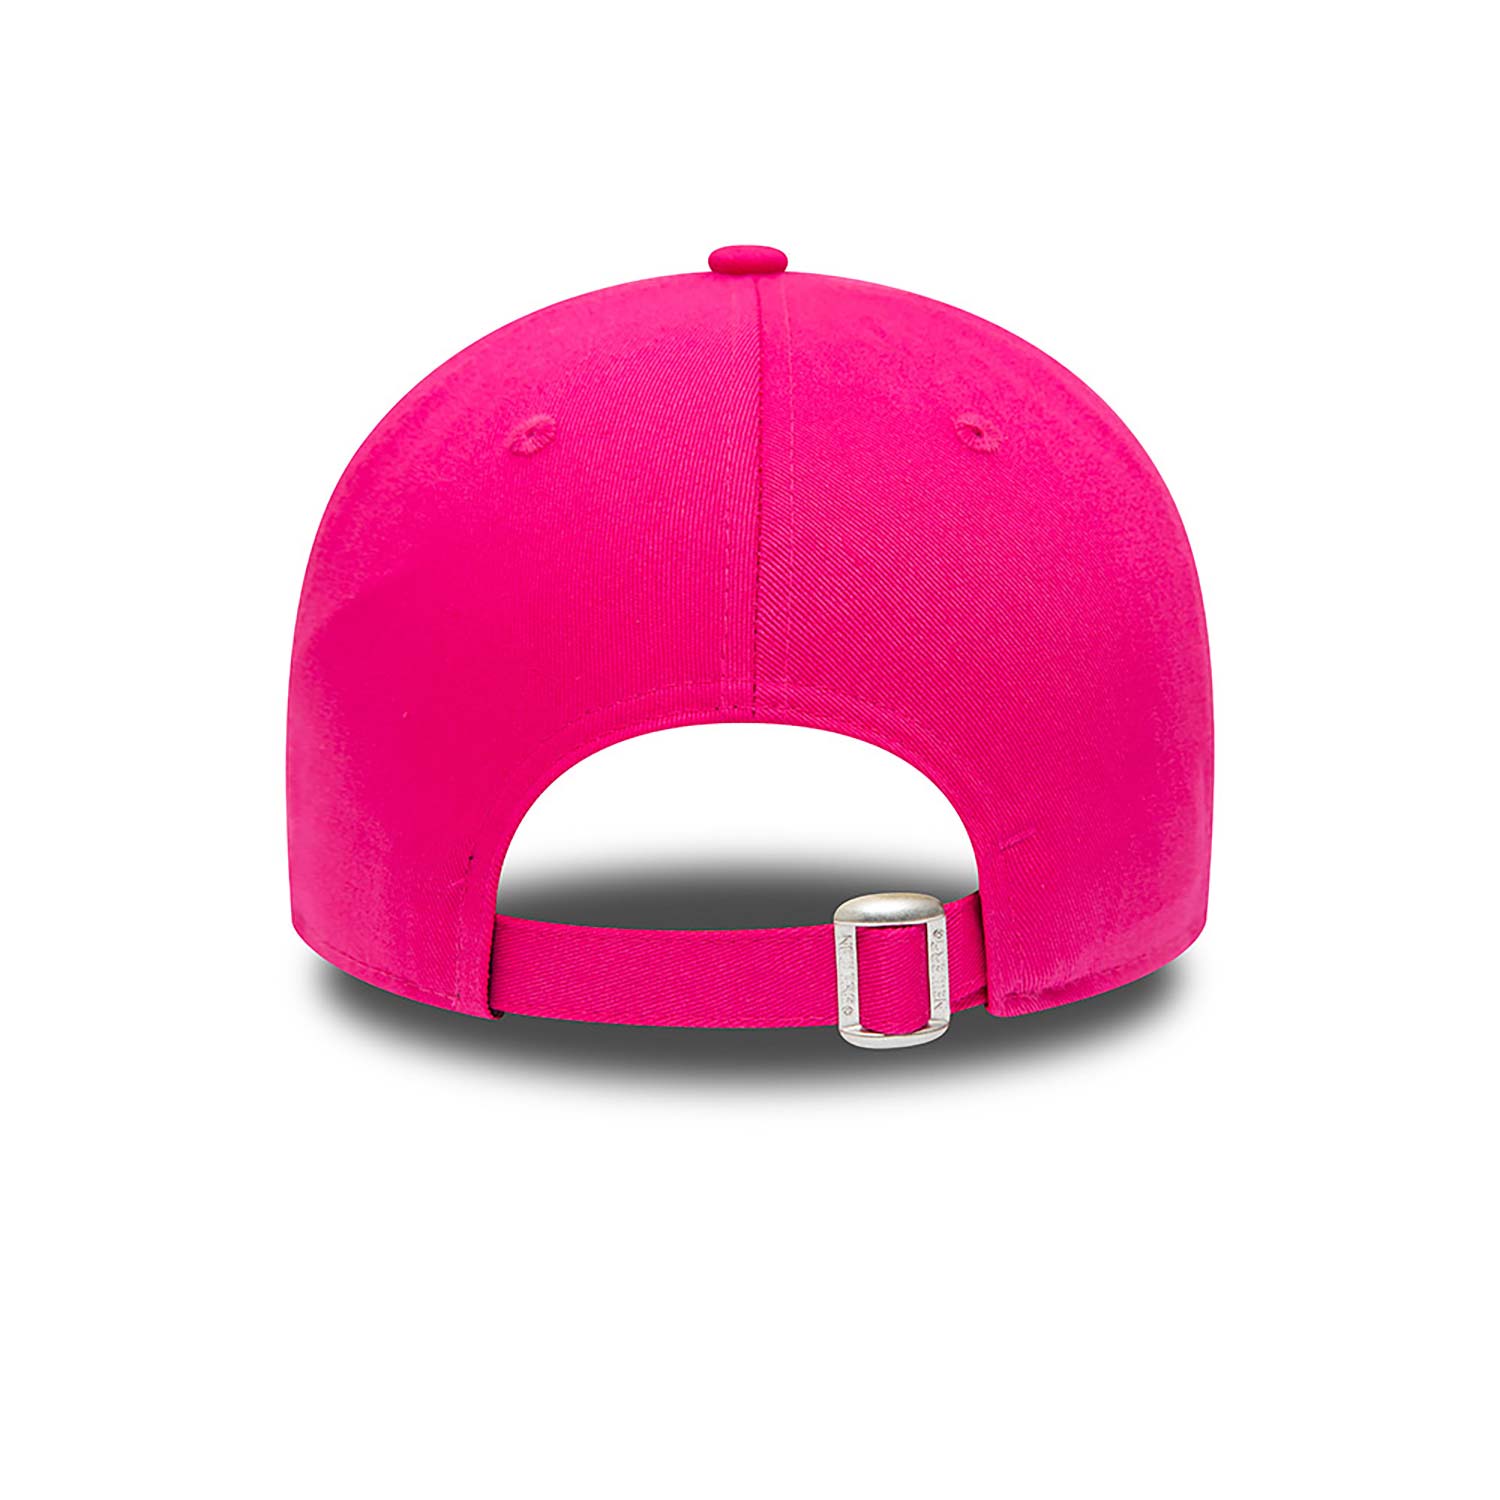 Vespa Seasonal Dark Pink 9FORTY Adjustable Cap